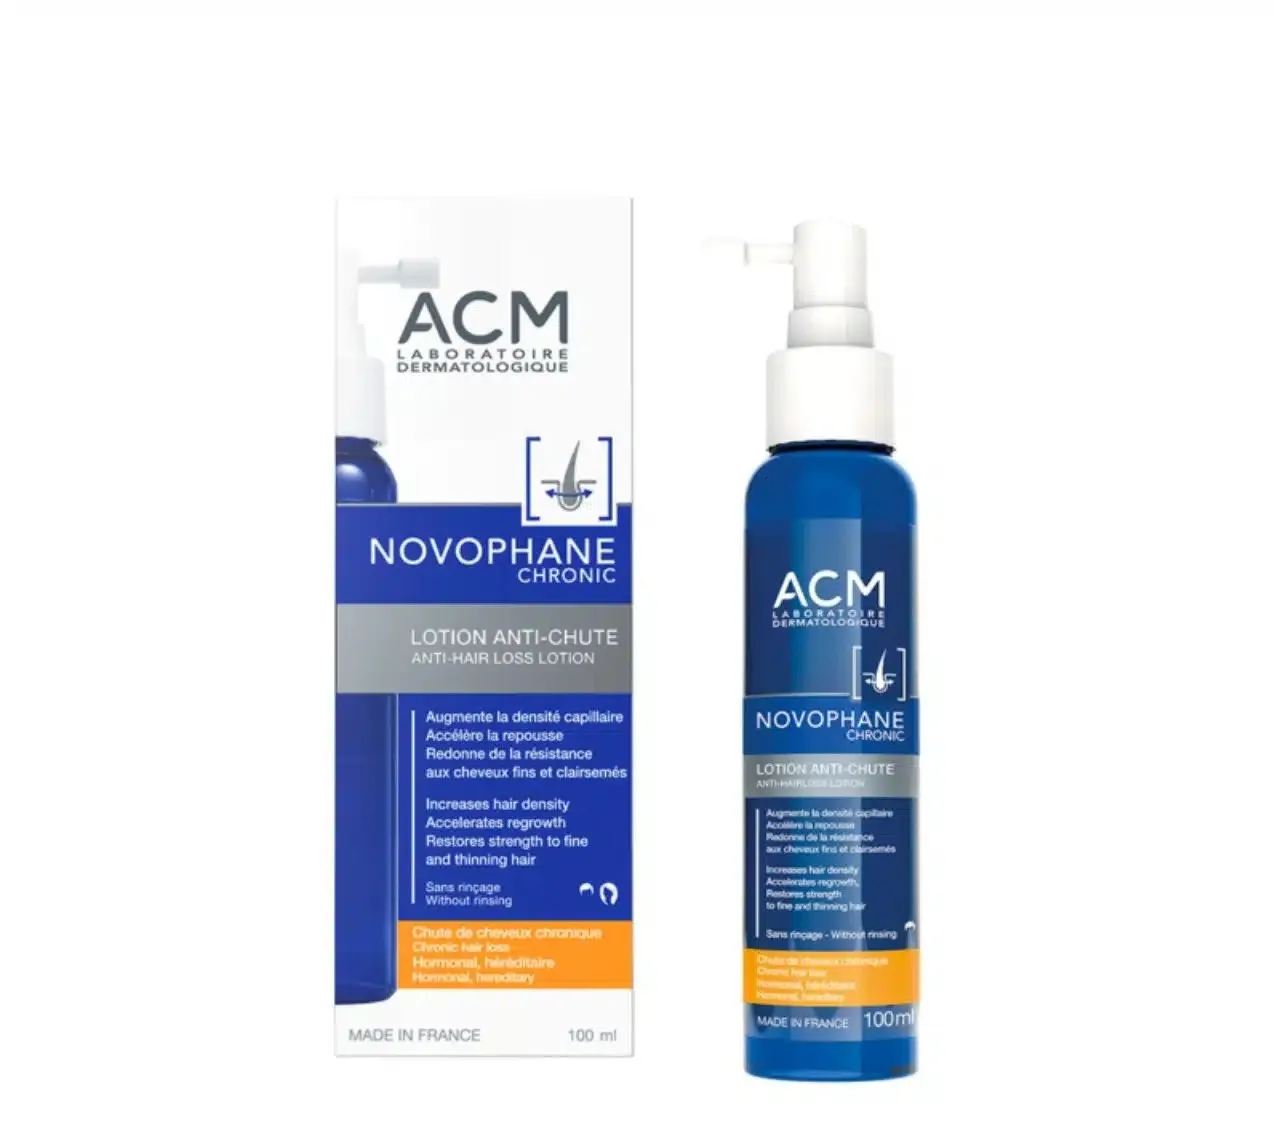 acm-novophane-chronic-lotion-anti-chute-100ml-3760095254500